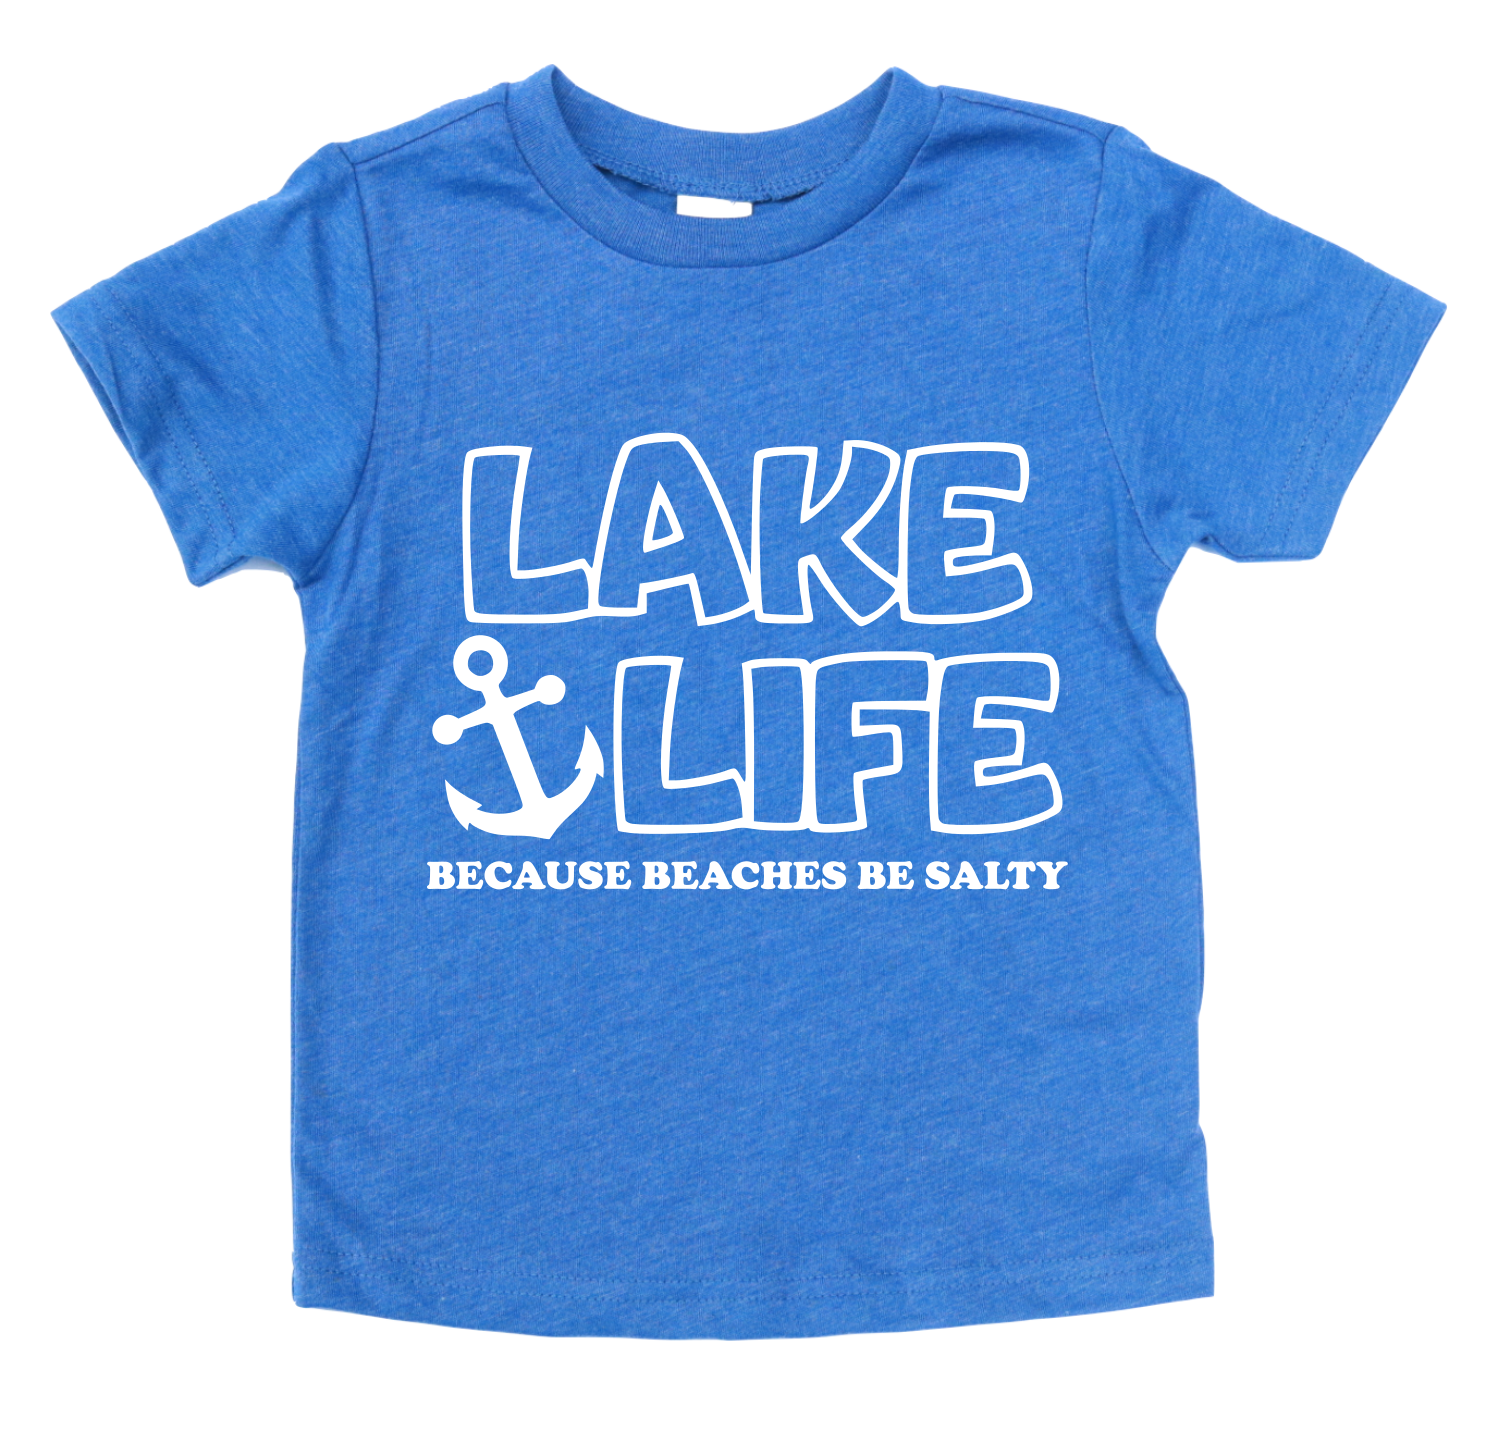 LAKE LIFE BECAUSE BEACHES BE SALTY KIDS SHIRT